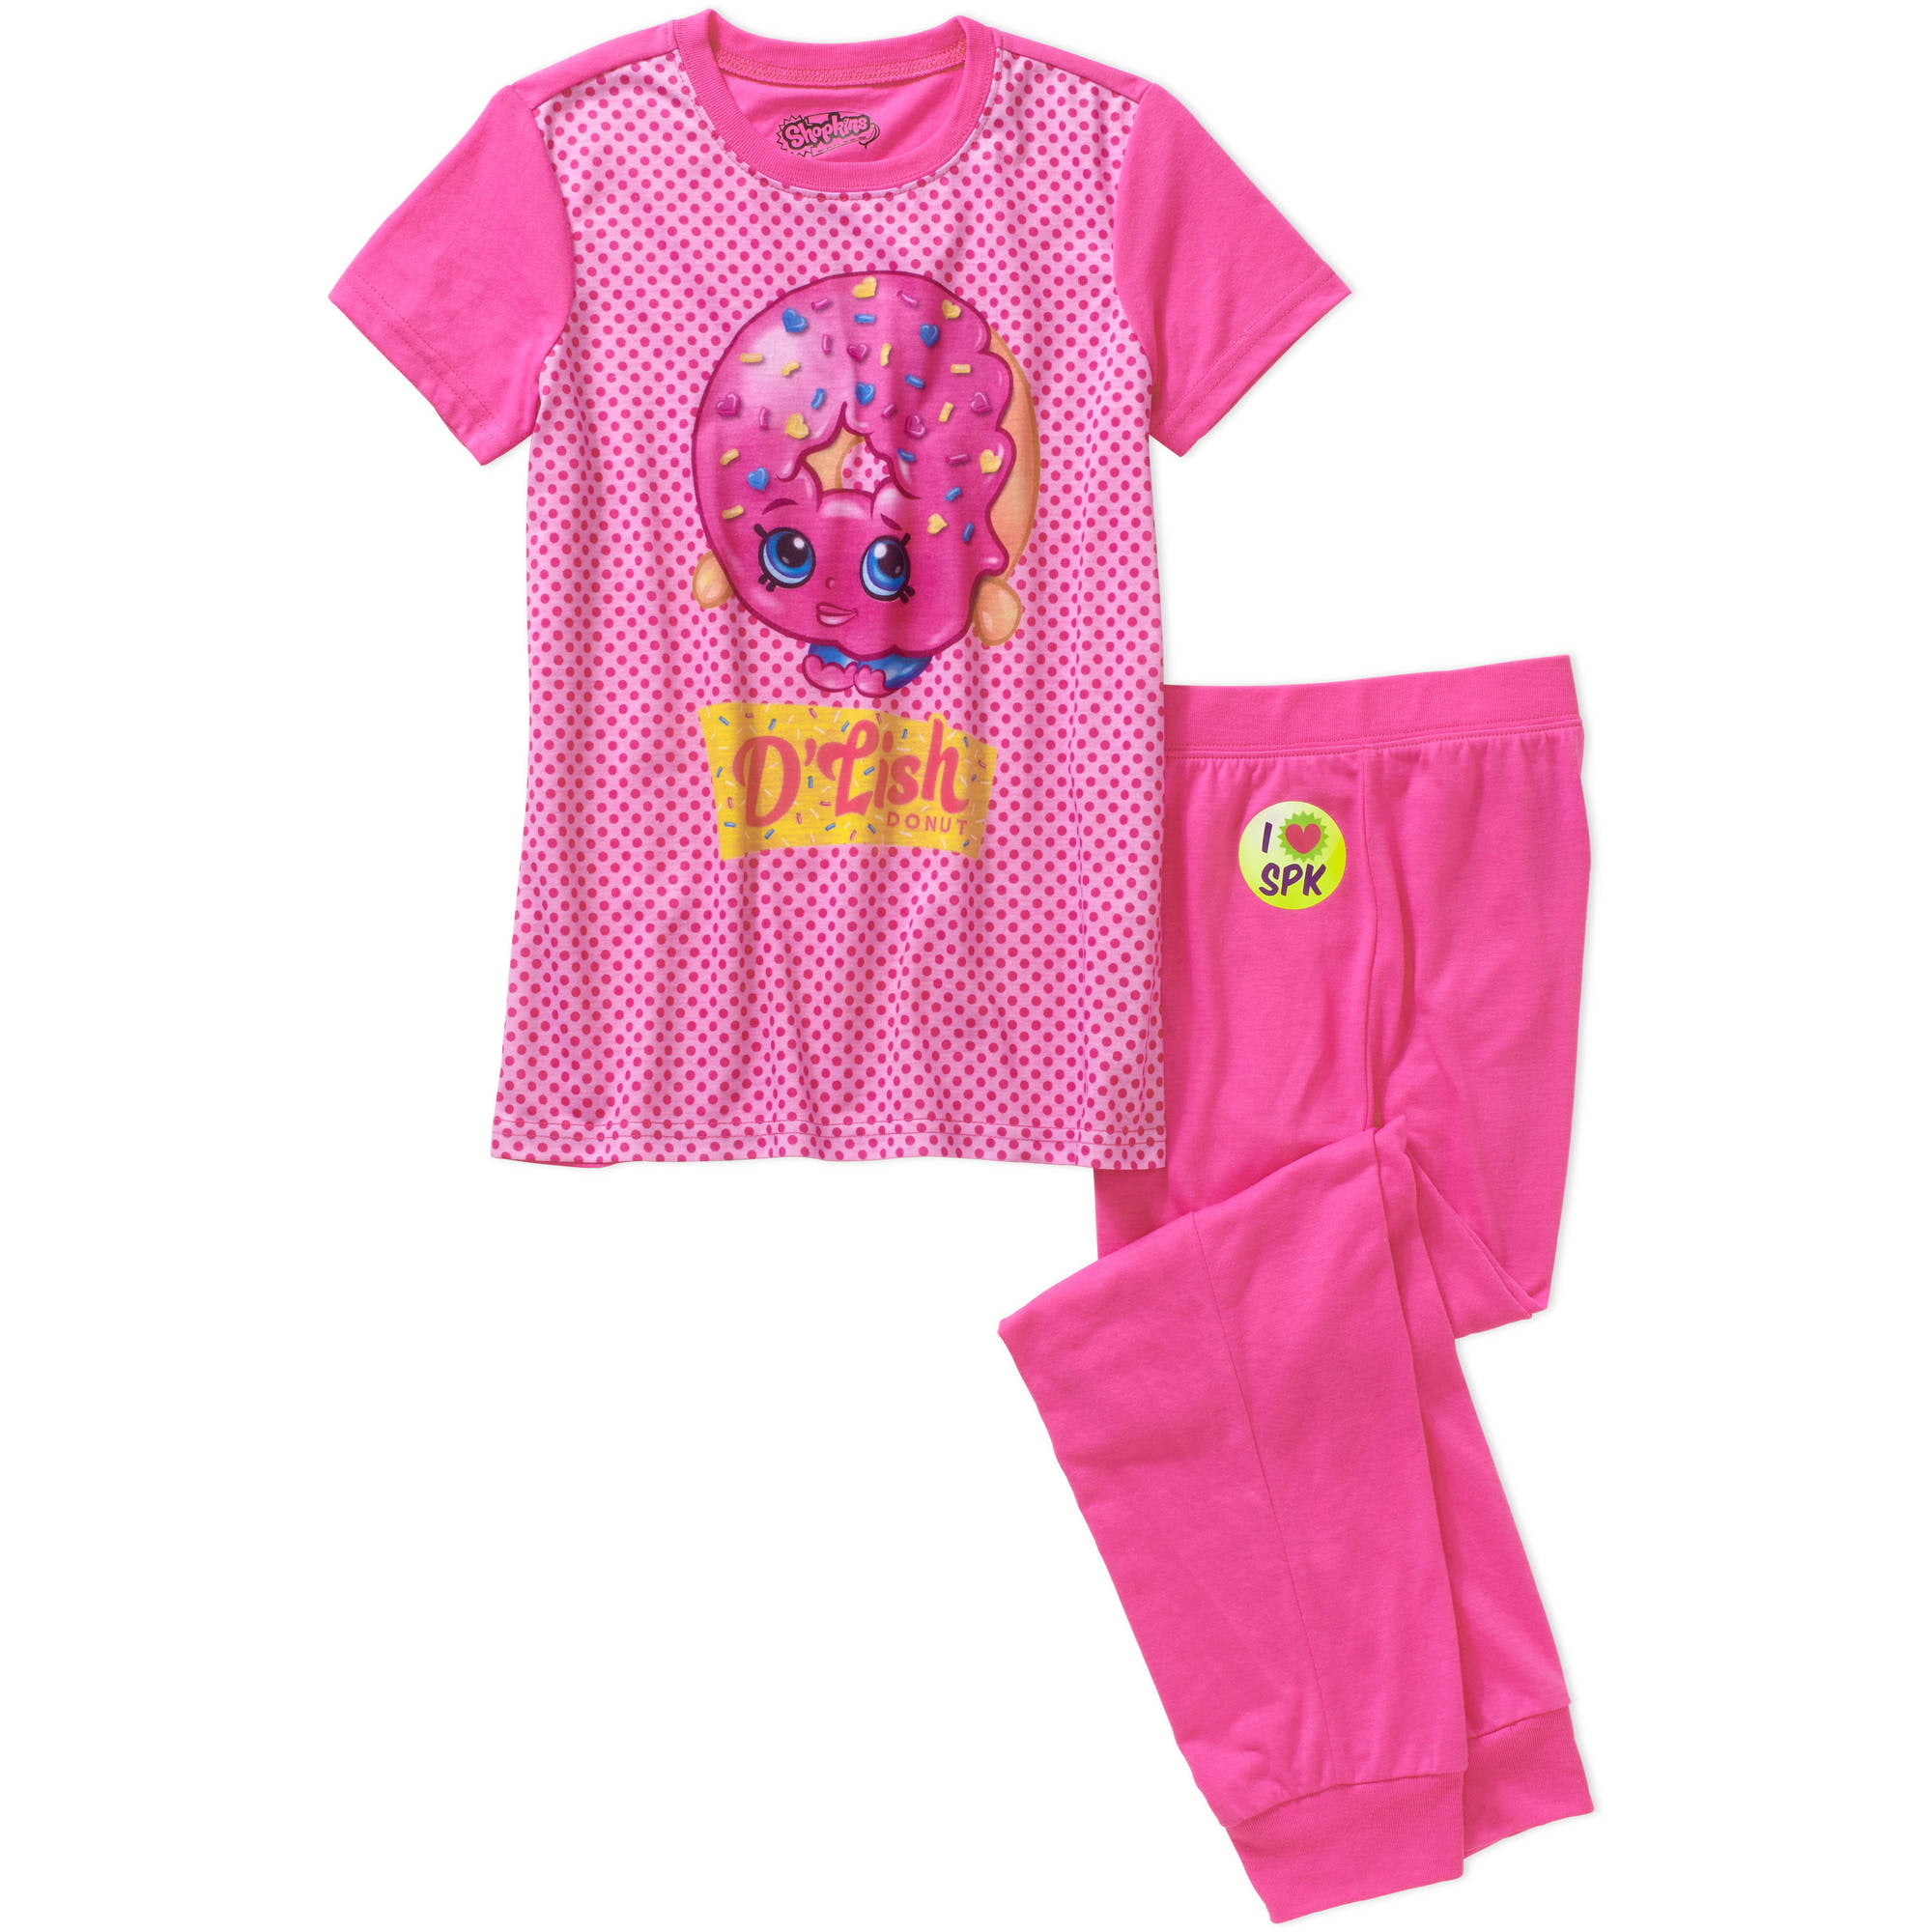 New Kids Girls Short Sleeve Clothing Set Cartoon shopkins Pajamas light weight 